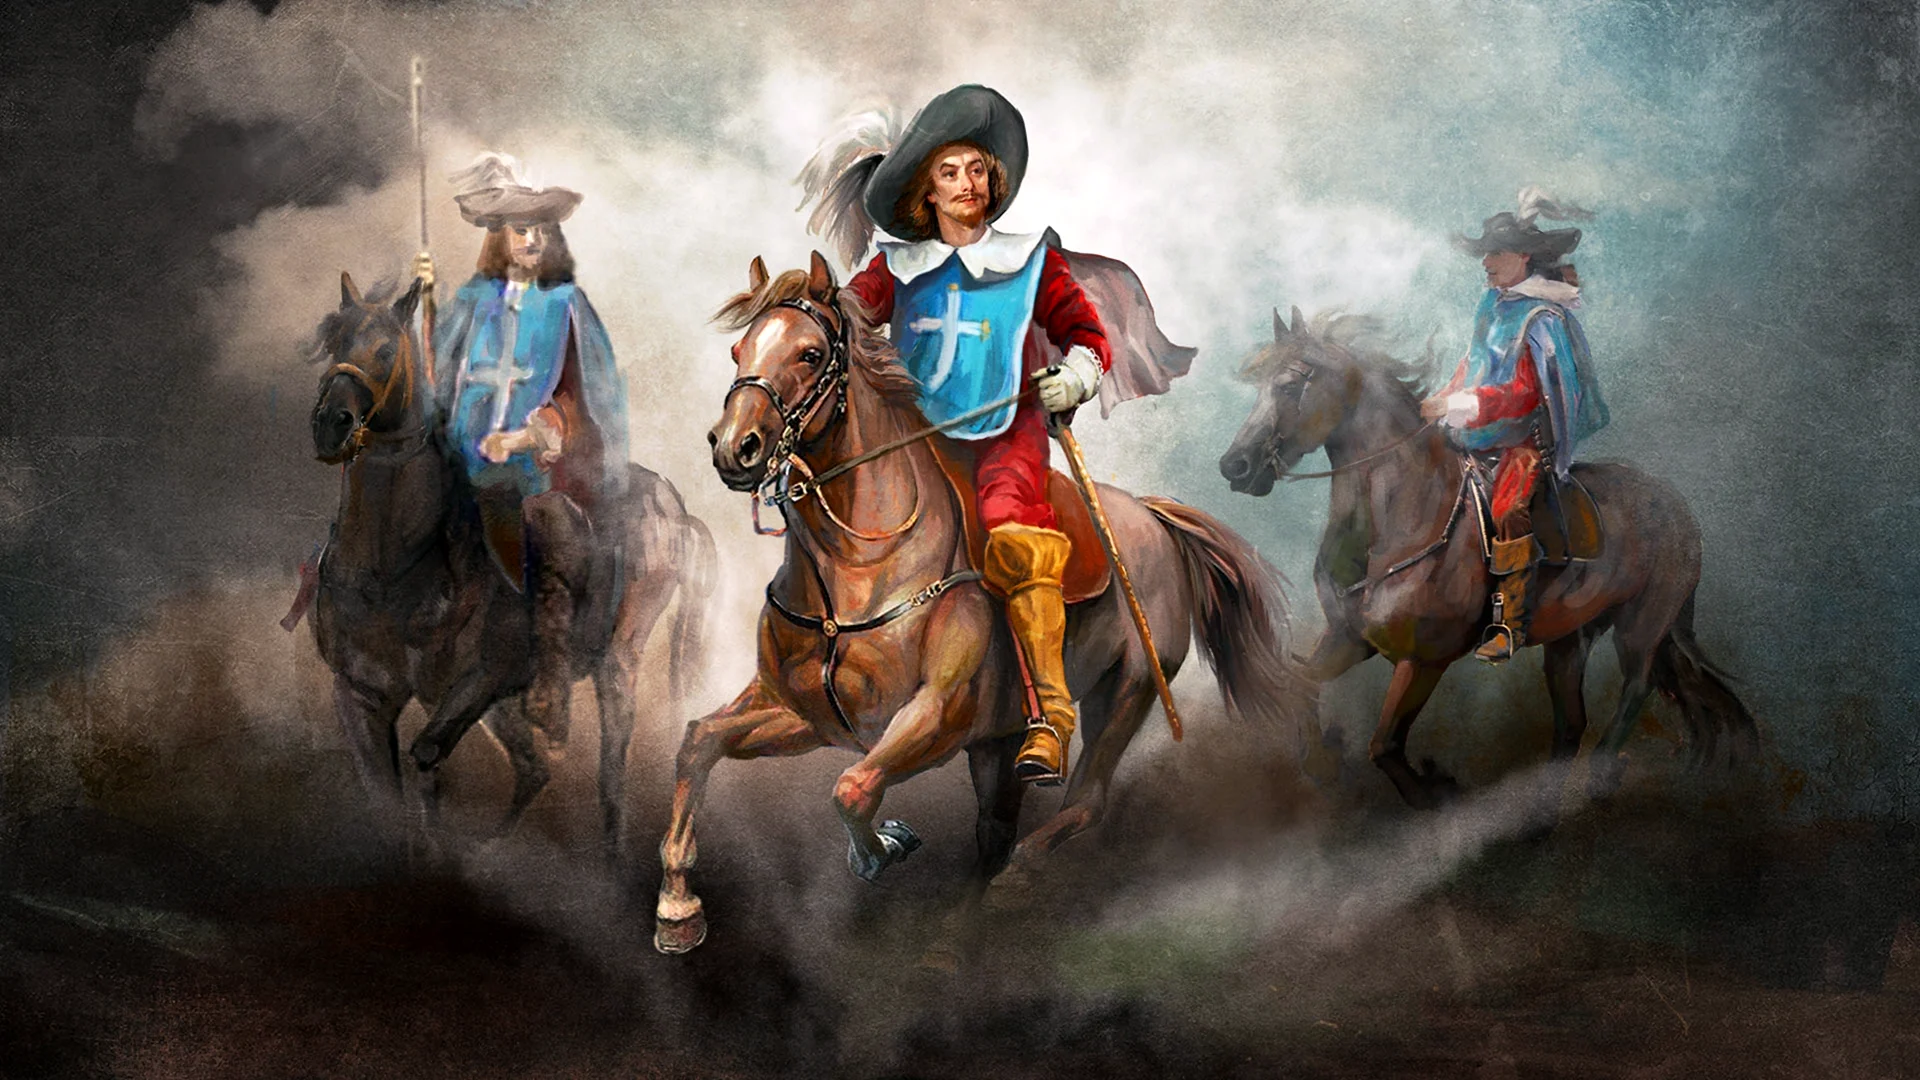 Королевские мушкетеры 17 века во Франции